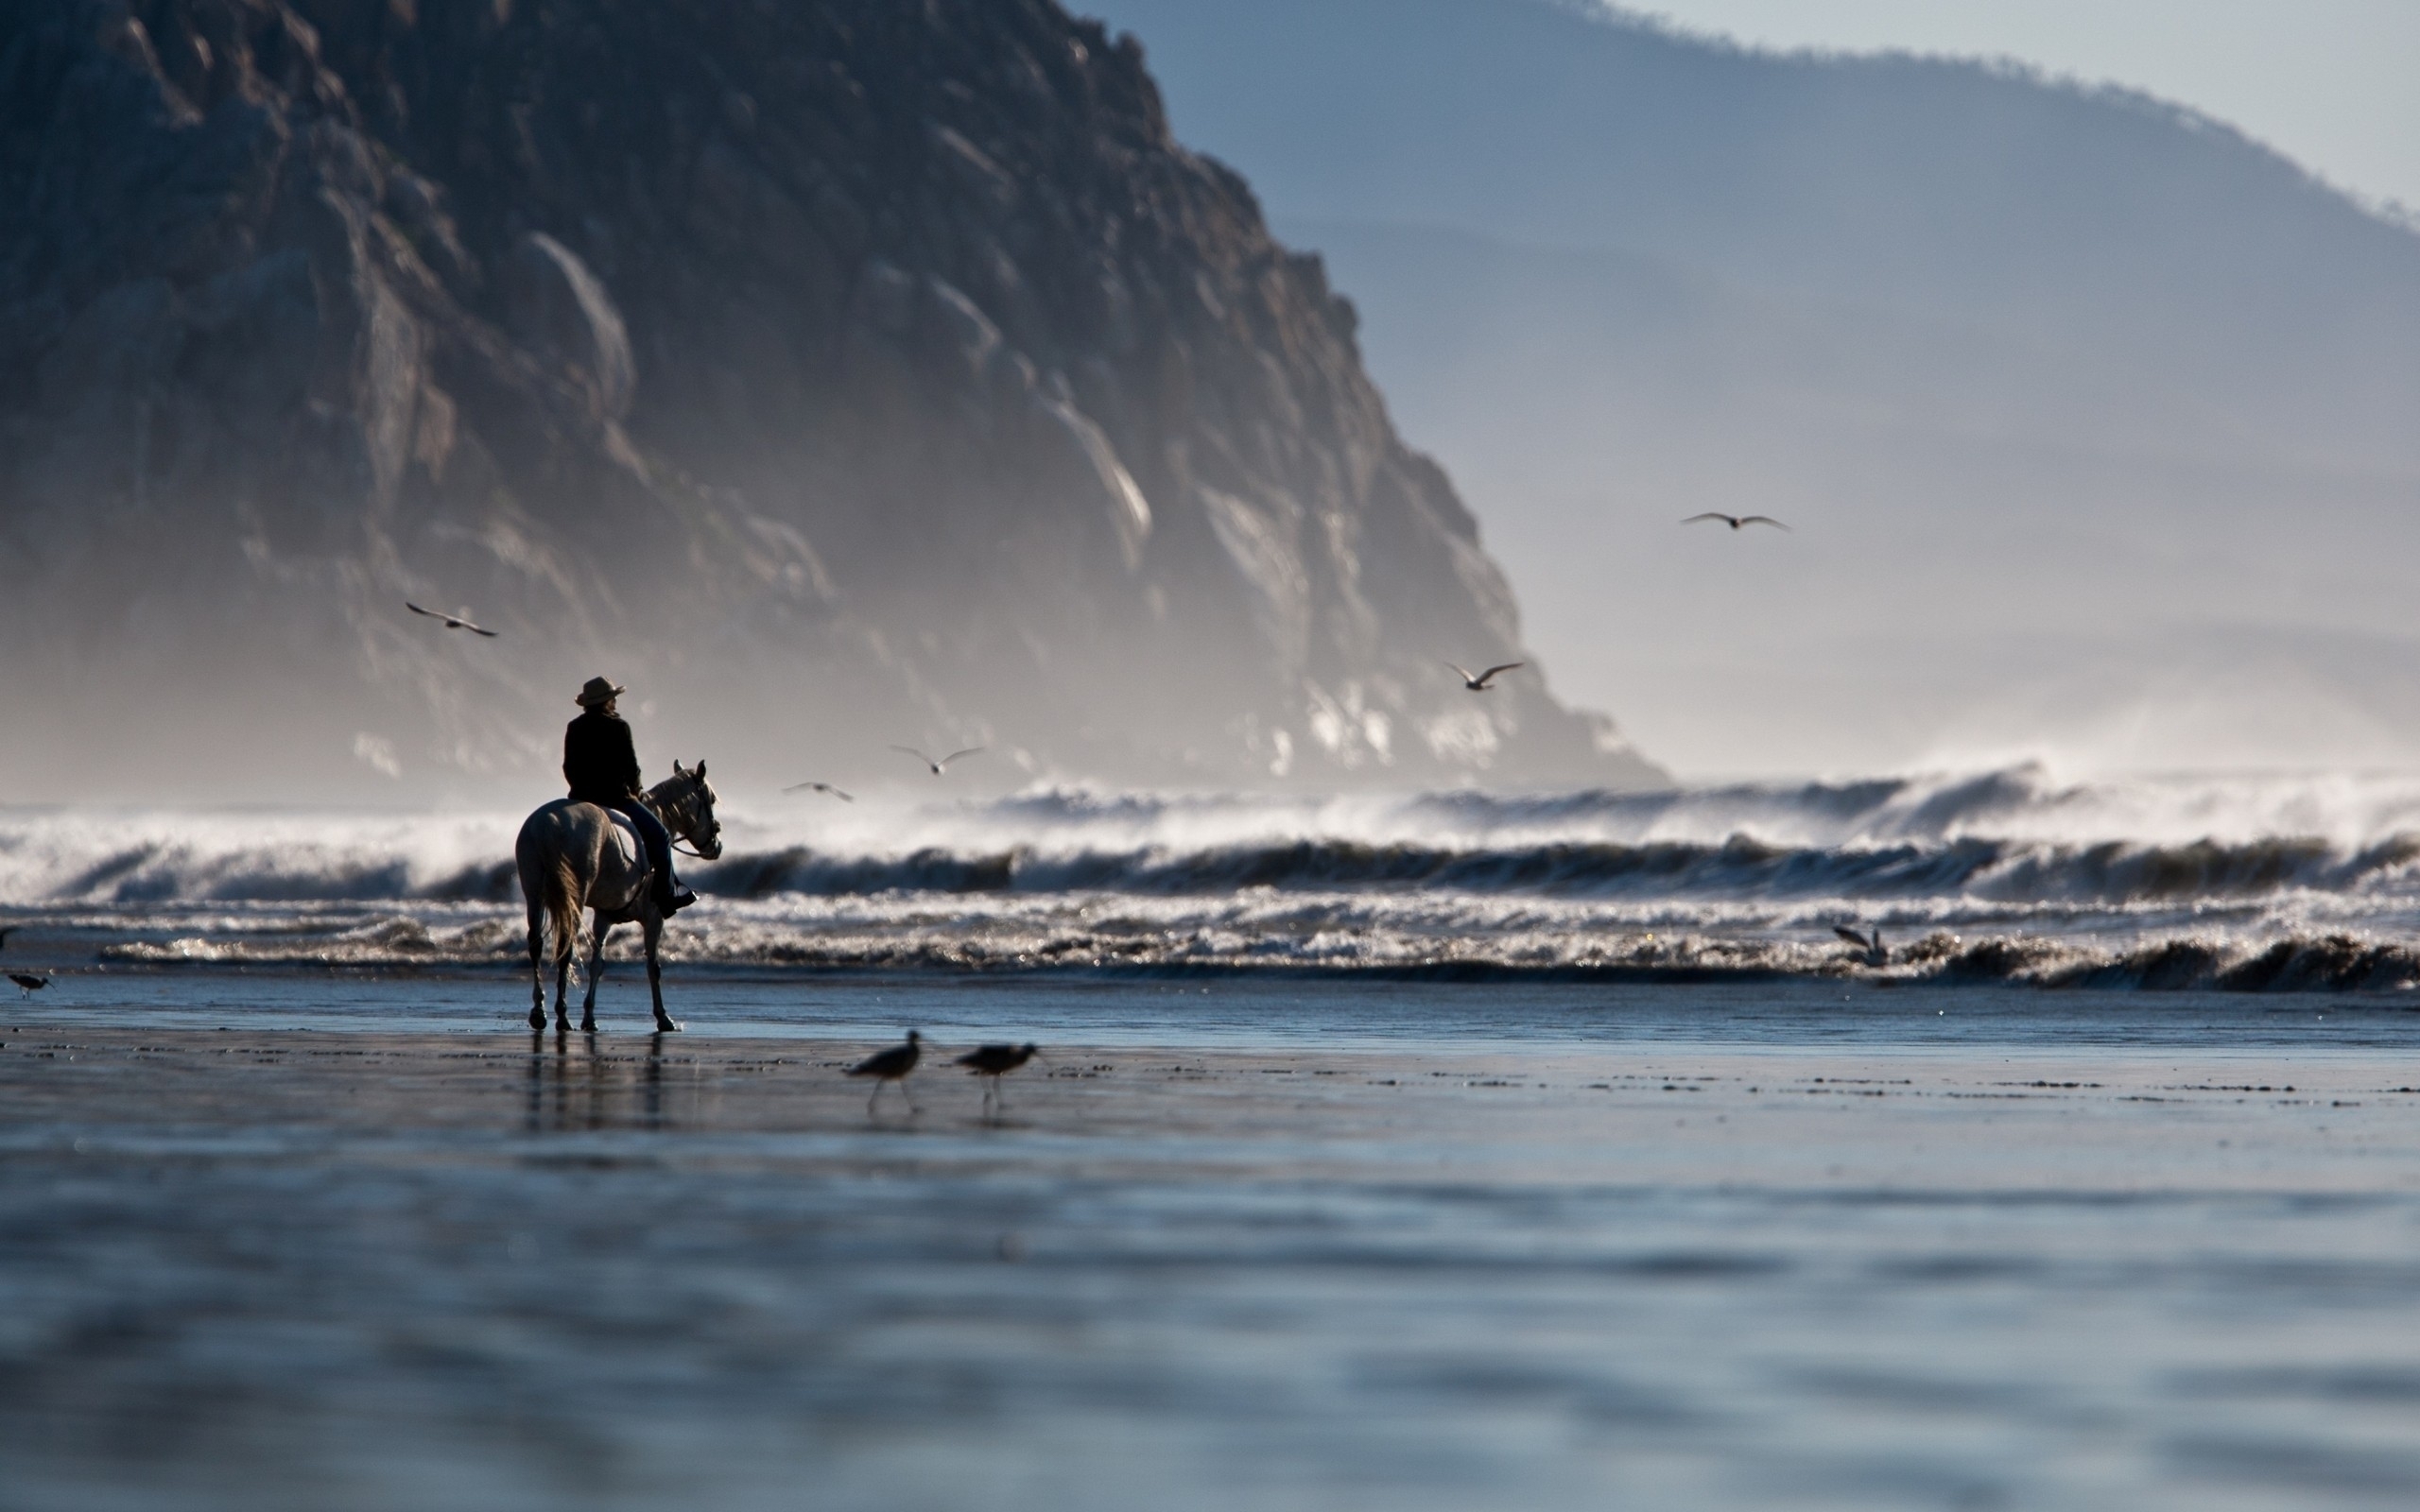 Horse At The Beach - HD Wallpaper 